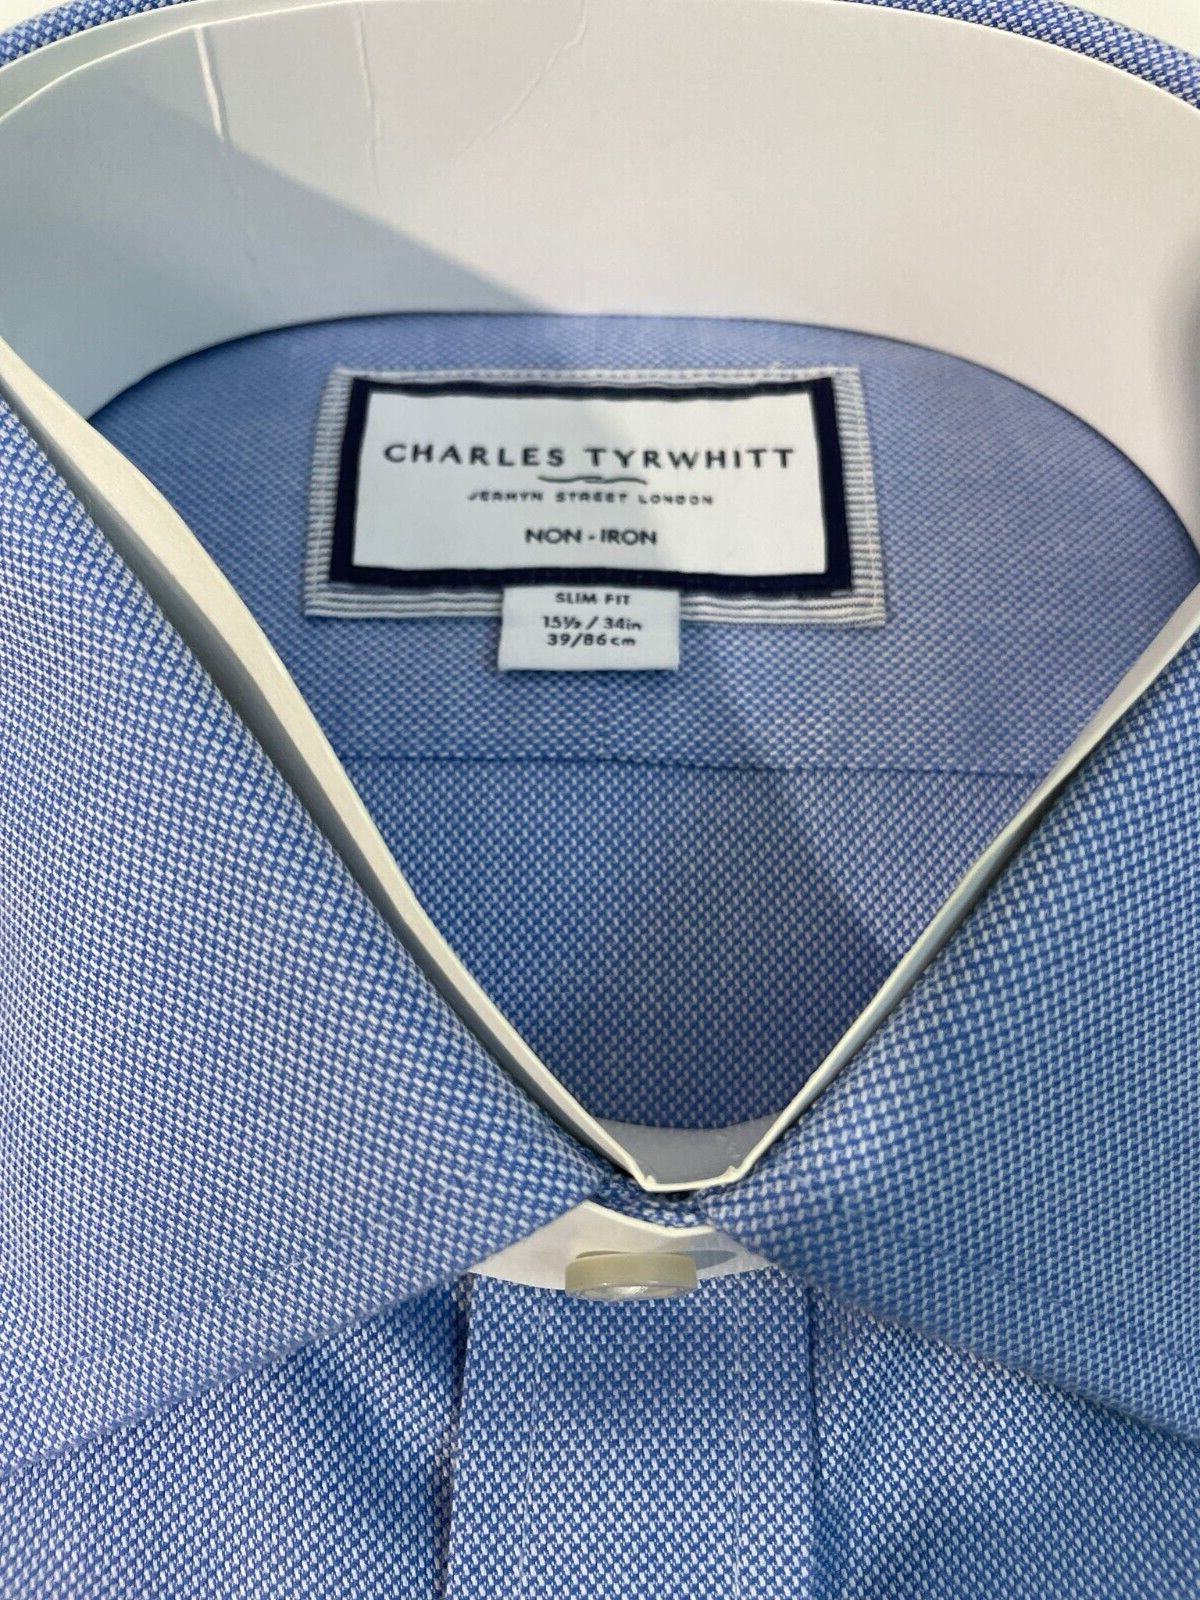 Charles Tyrwhitt Mens 17/34 Ocean Blue Royal Oxford Dress Shirt Classic Fit